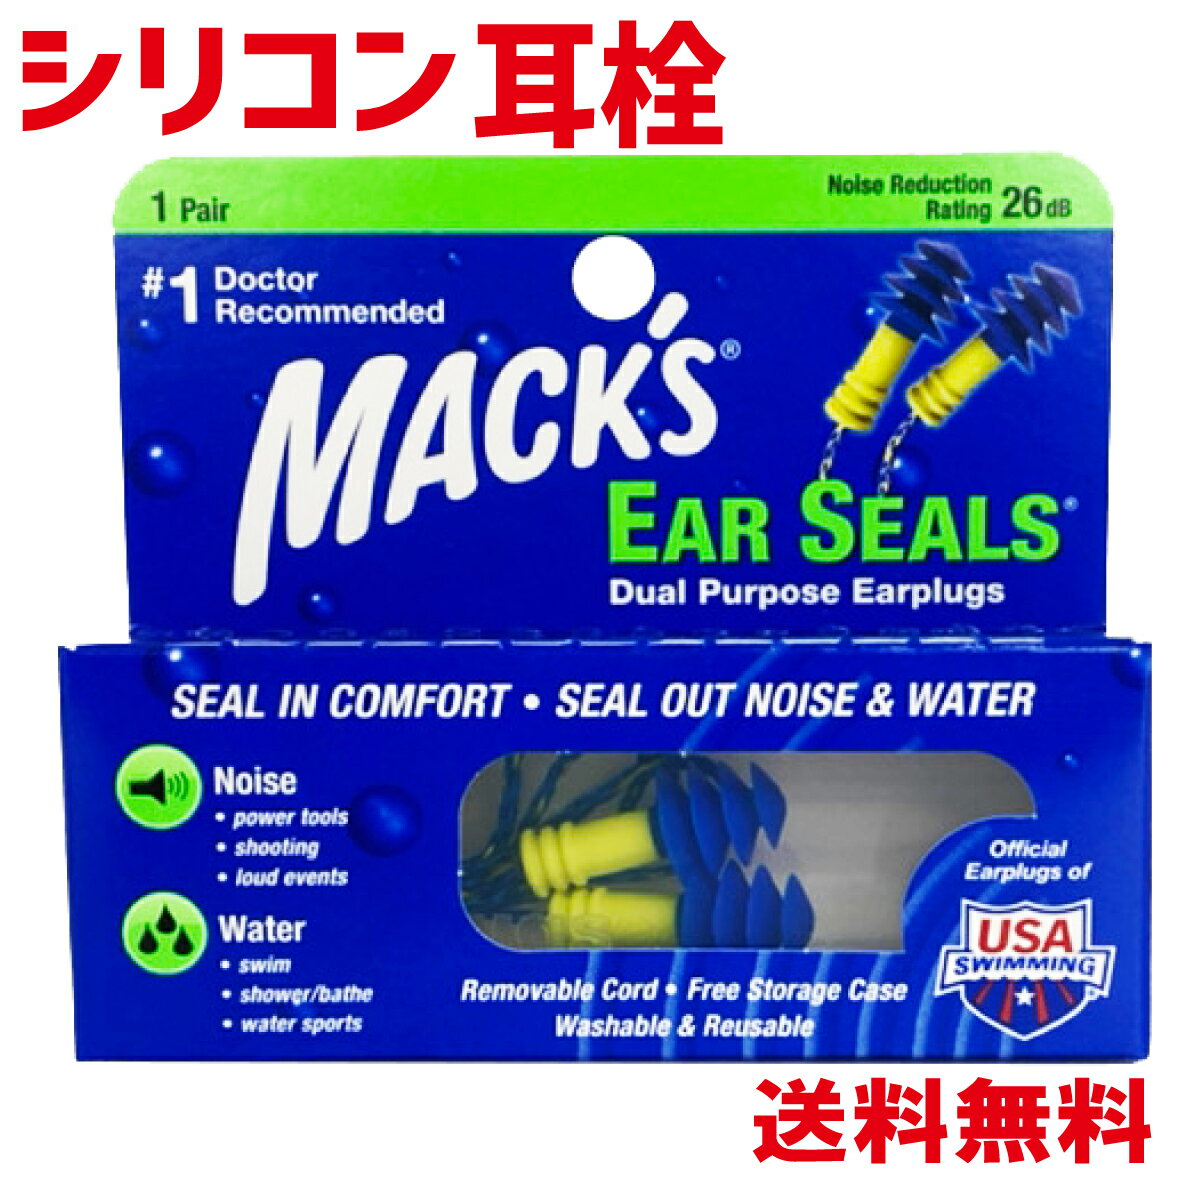 MACKS マックス 耳栓 イヤー シールズ コード付き シリコン製 ブルー 防音 防水 マリンスポーツ ウインタースポーツ サーフィン 水泳 サウナ EAR SEALS 1ペア